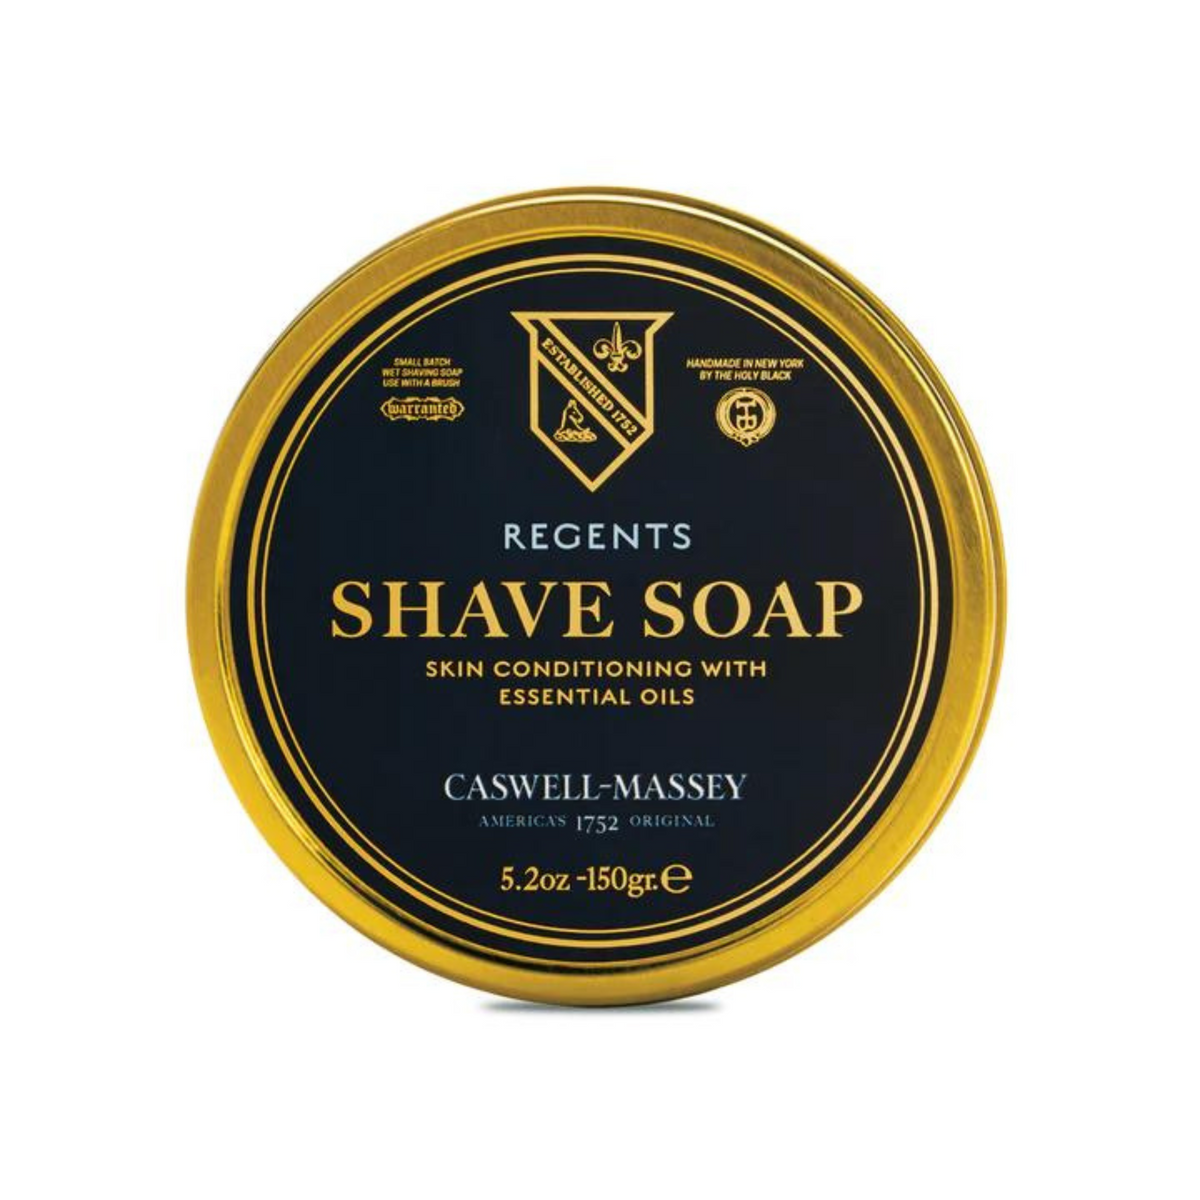 Primary Image of Regents Shave Soap (5.2 oz)